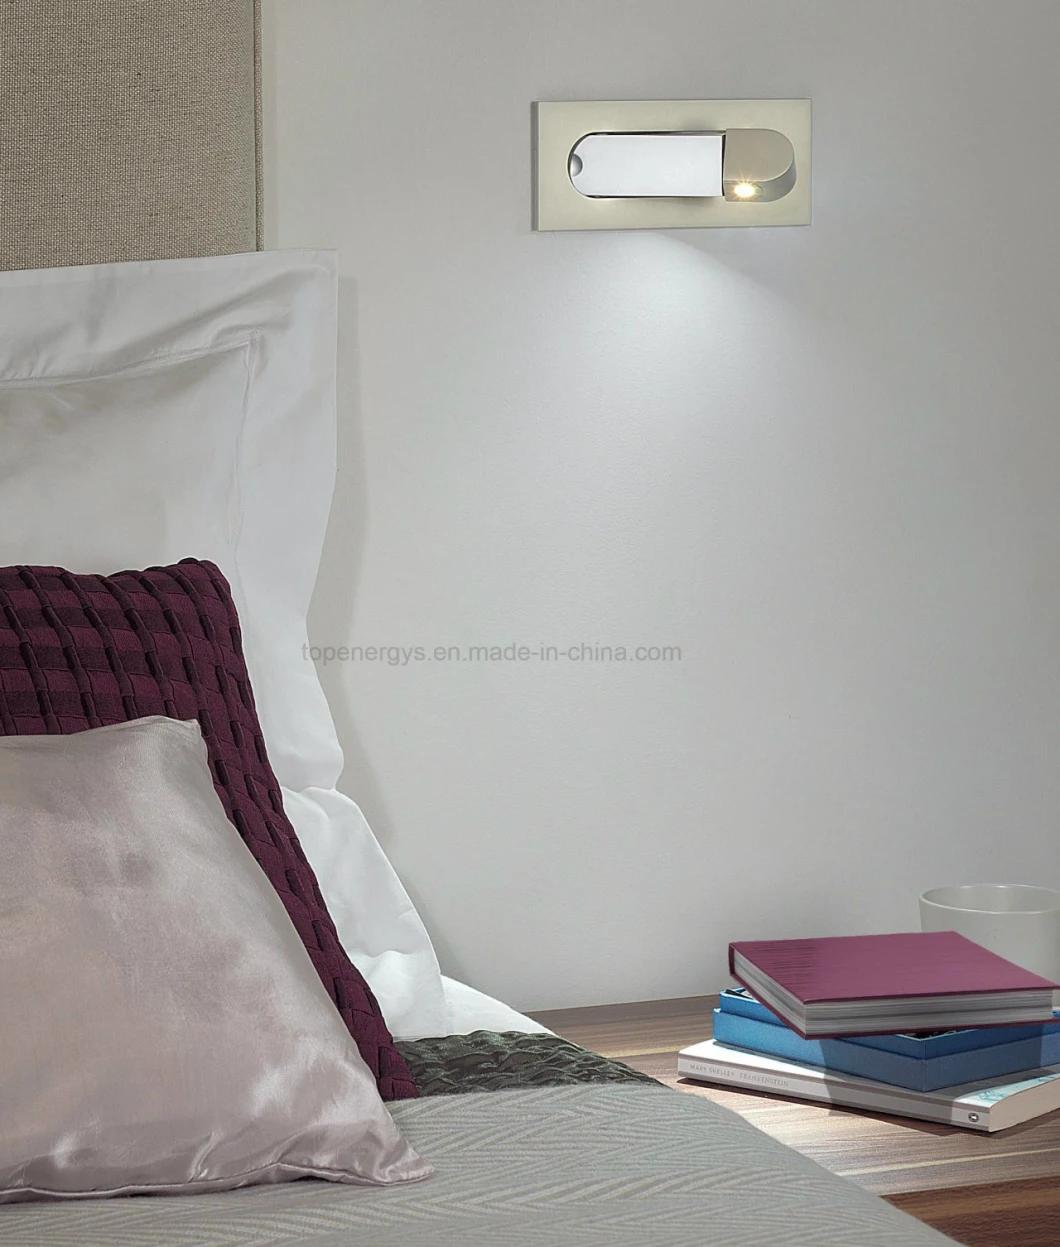 Rotatable LED Wall Lamp Bh-003 Decorative Adjustable Headboard Light Hotel Bedside Reading Light